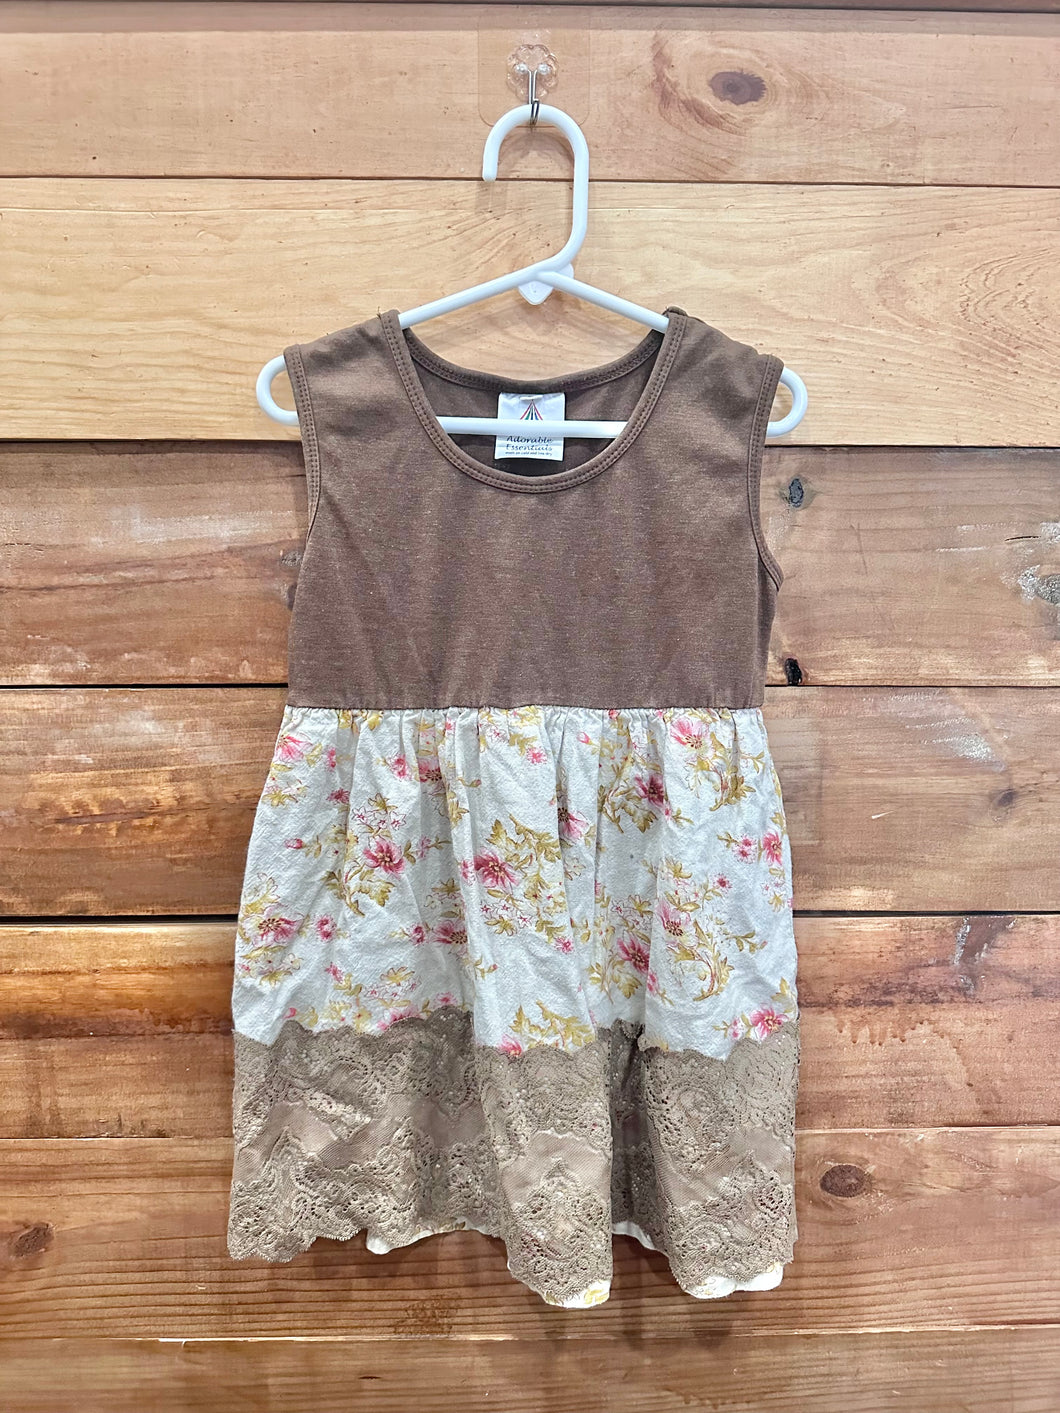 Adorable Essentials Brown Flower Dress Size 6